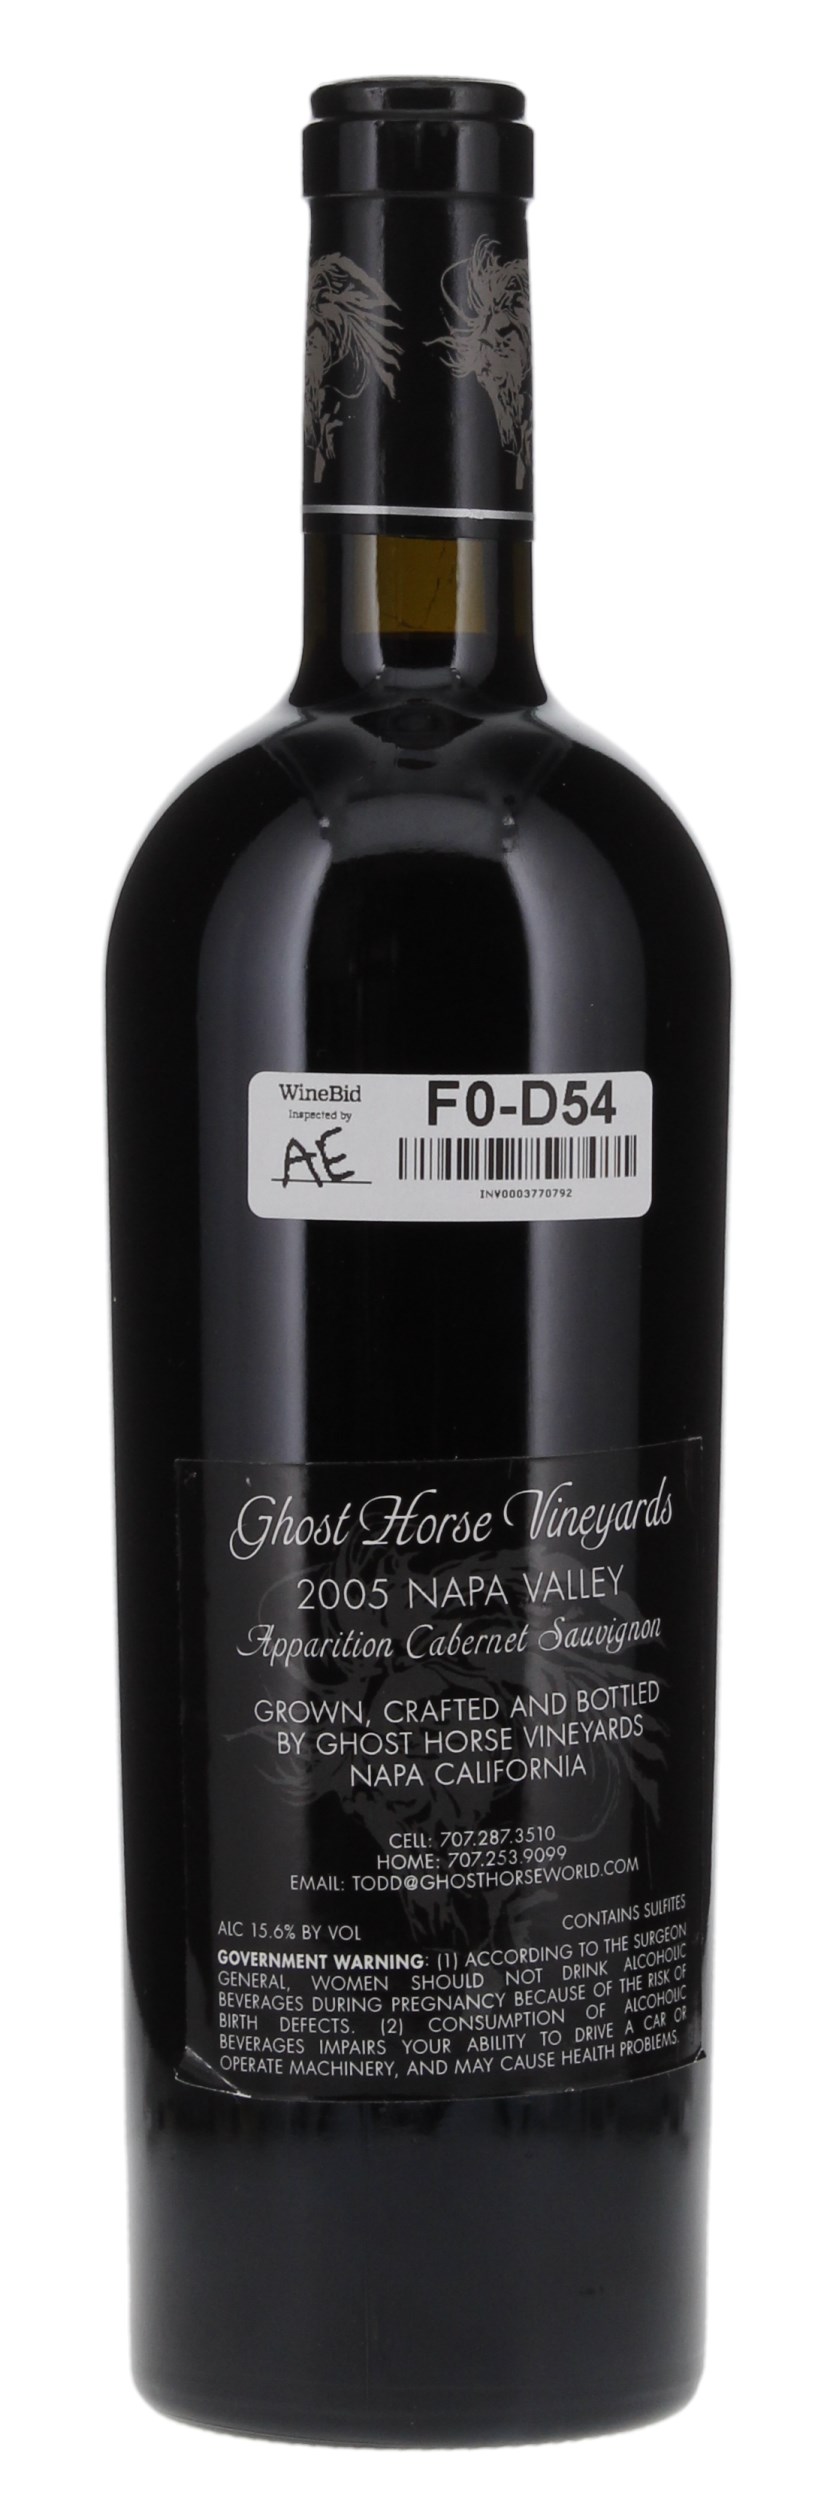 2005 Ghost Horse Vineyard Apparition Cabernet Sauvignon, 750ml